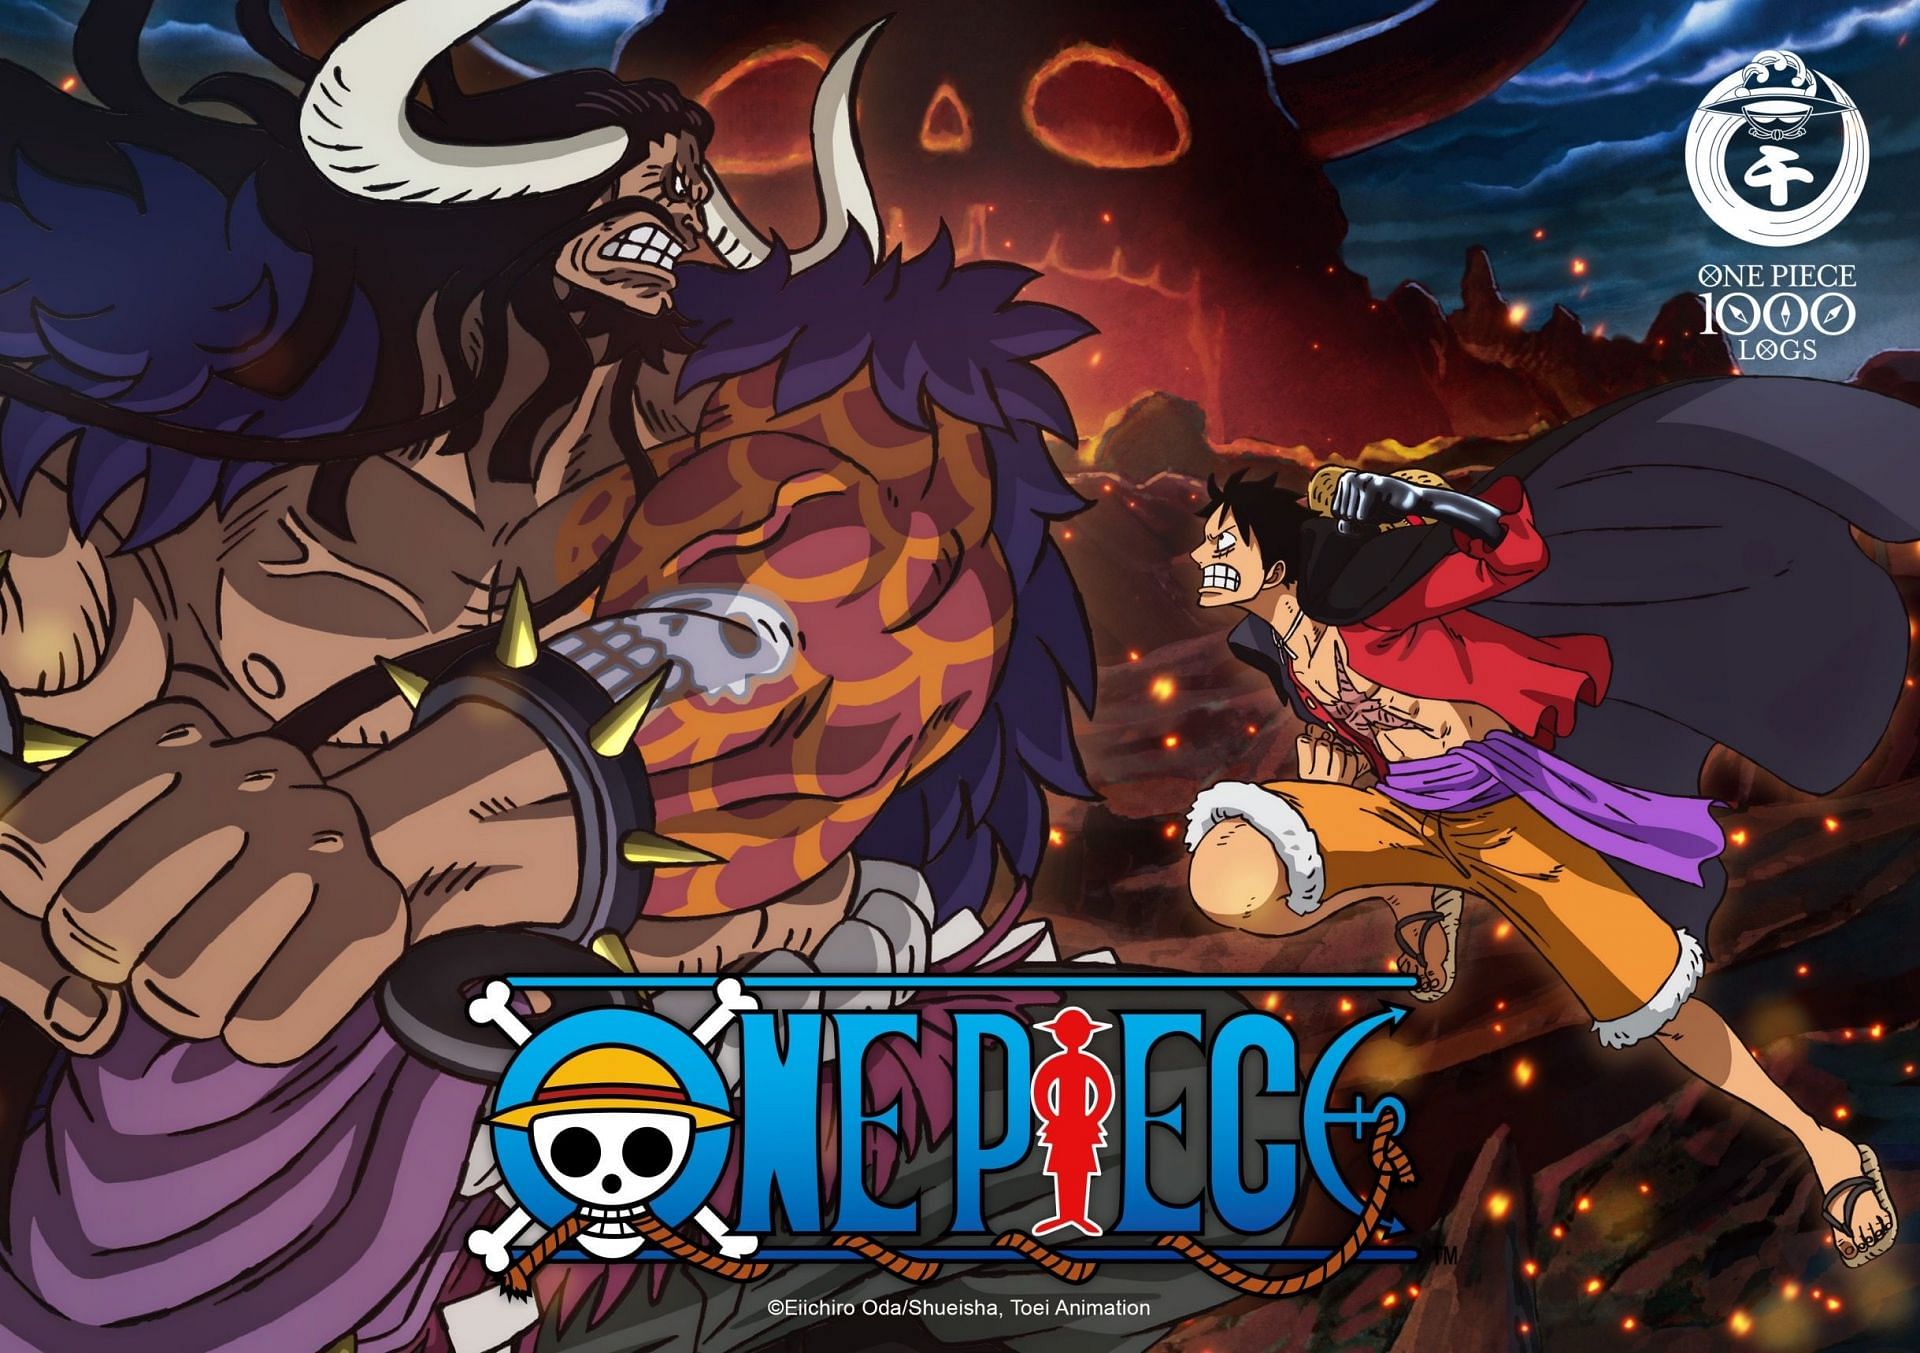 Toei Animation servers hacked, One Piece anime suspended indefinitely